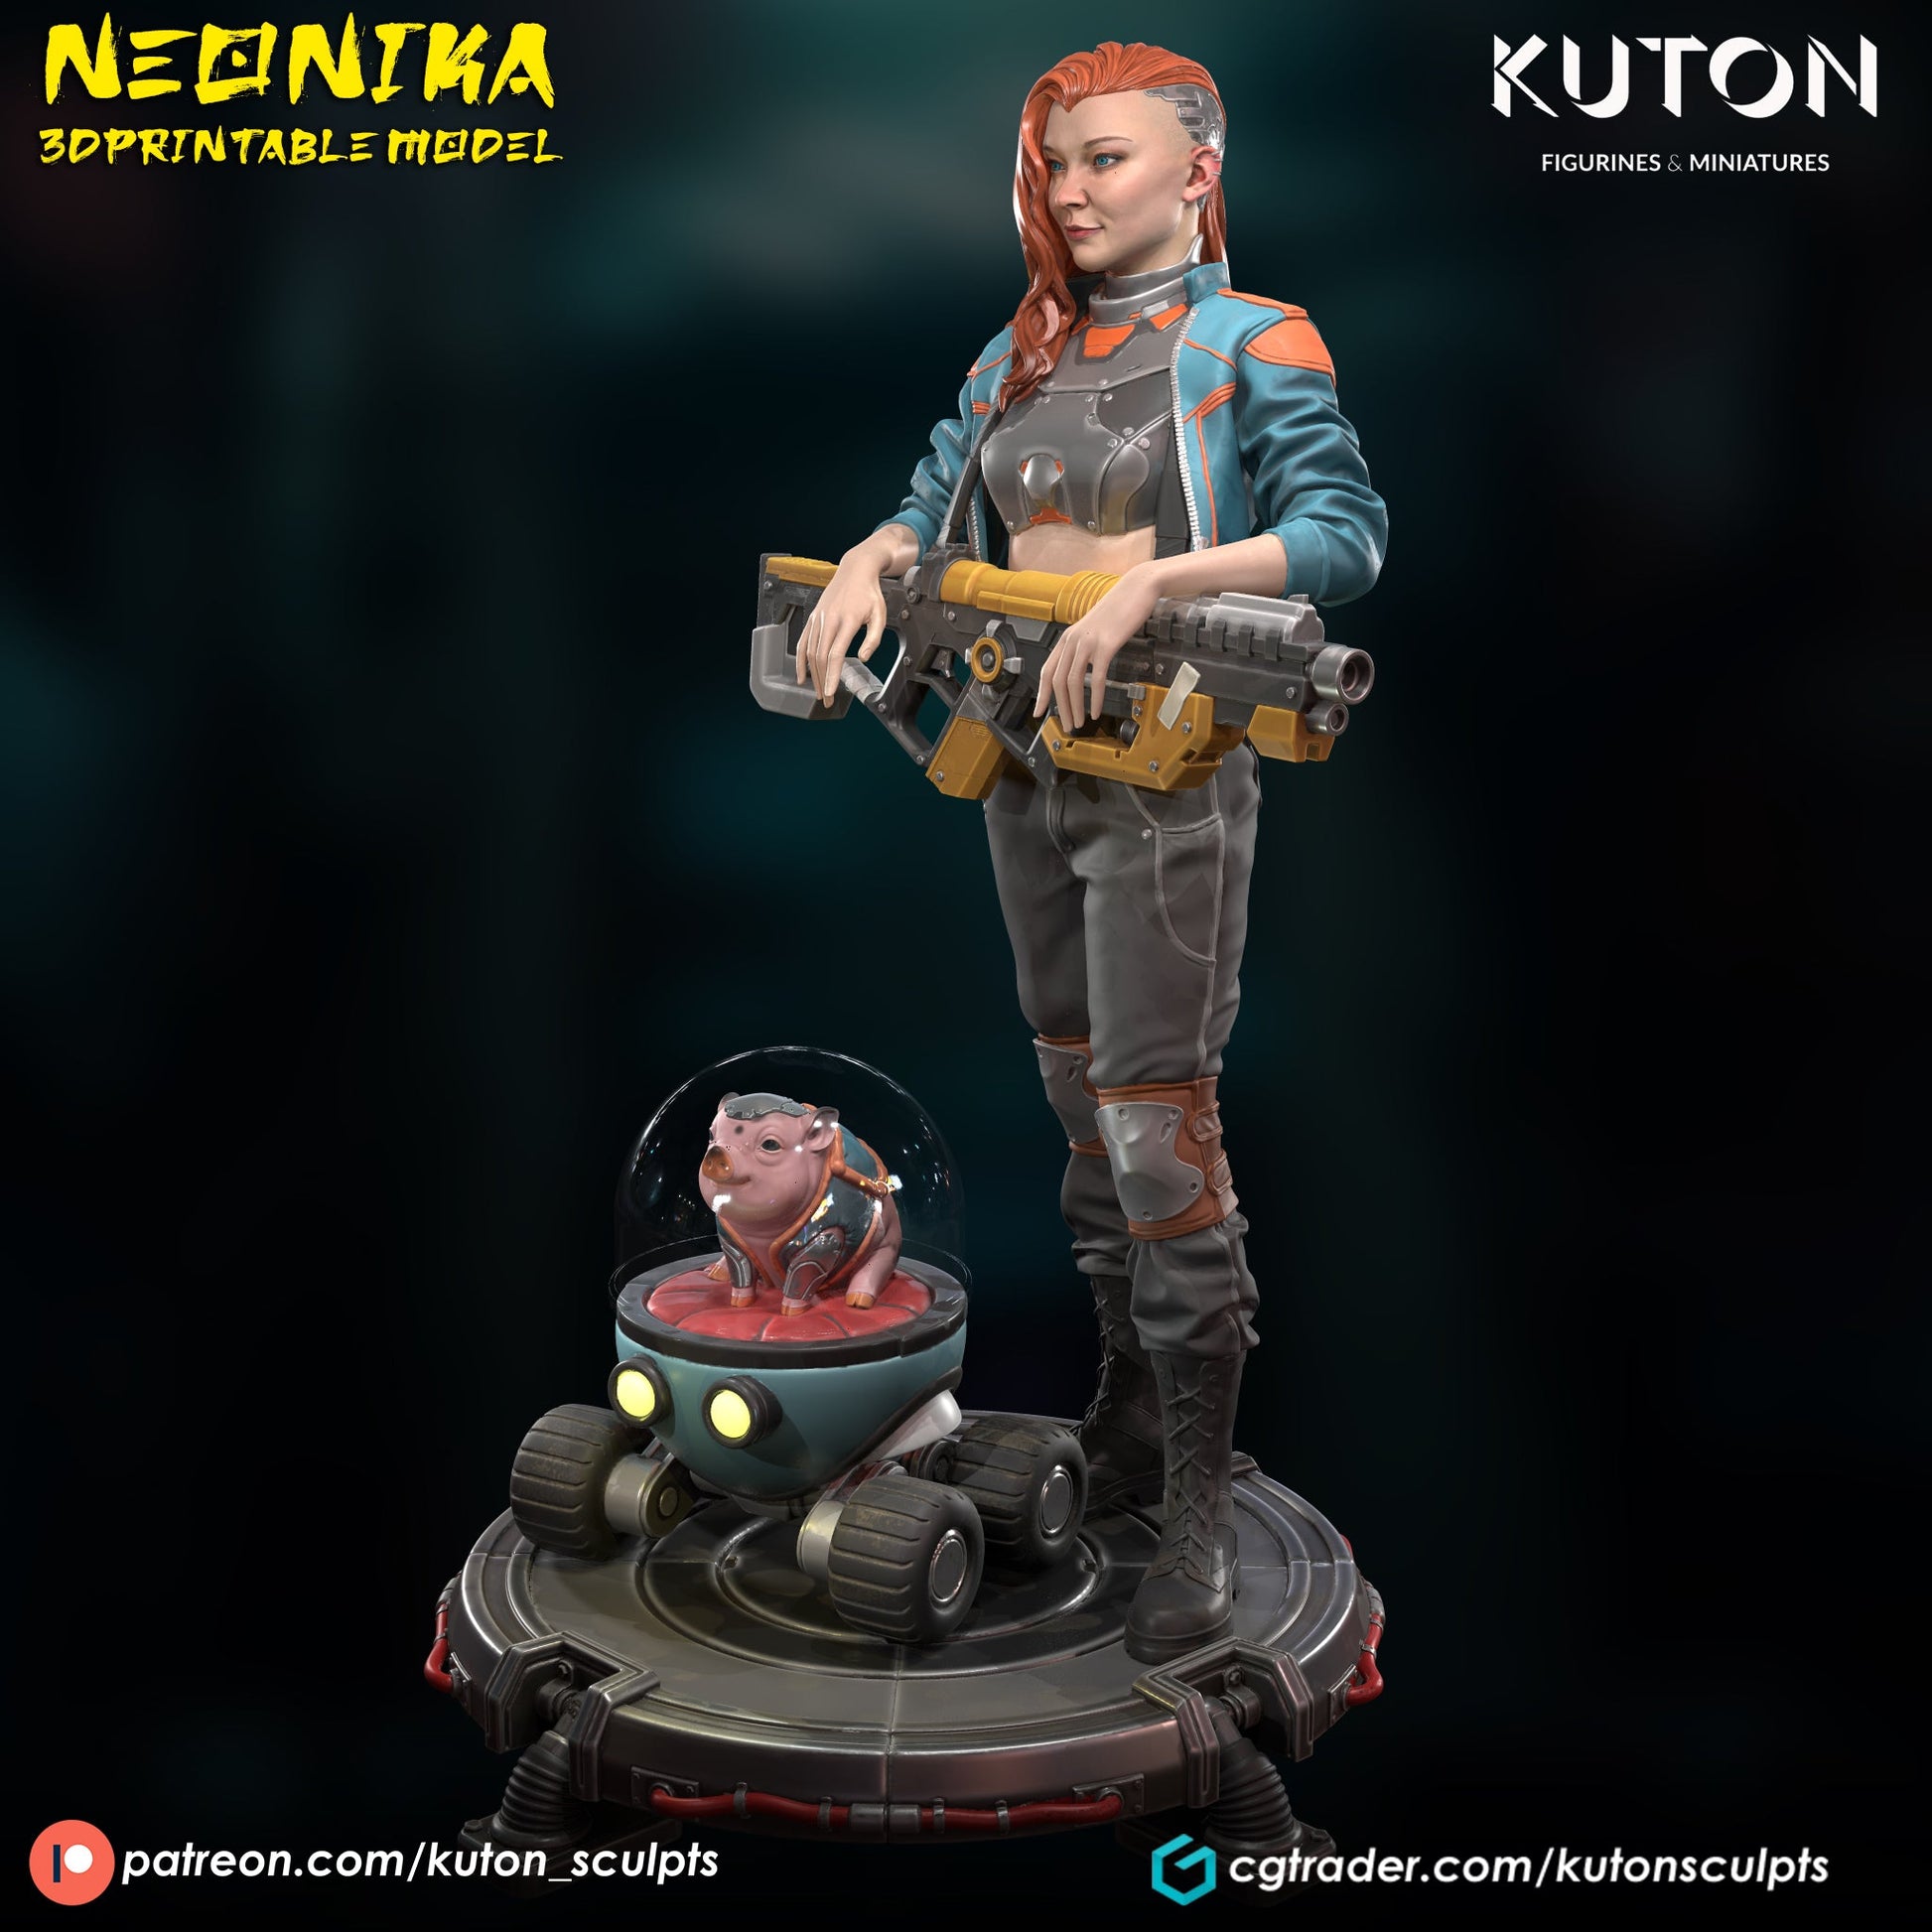 Resin Miniature Scale model: Neonika Resin Figurine